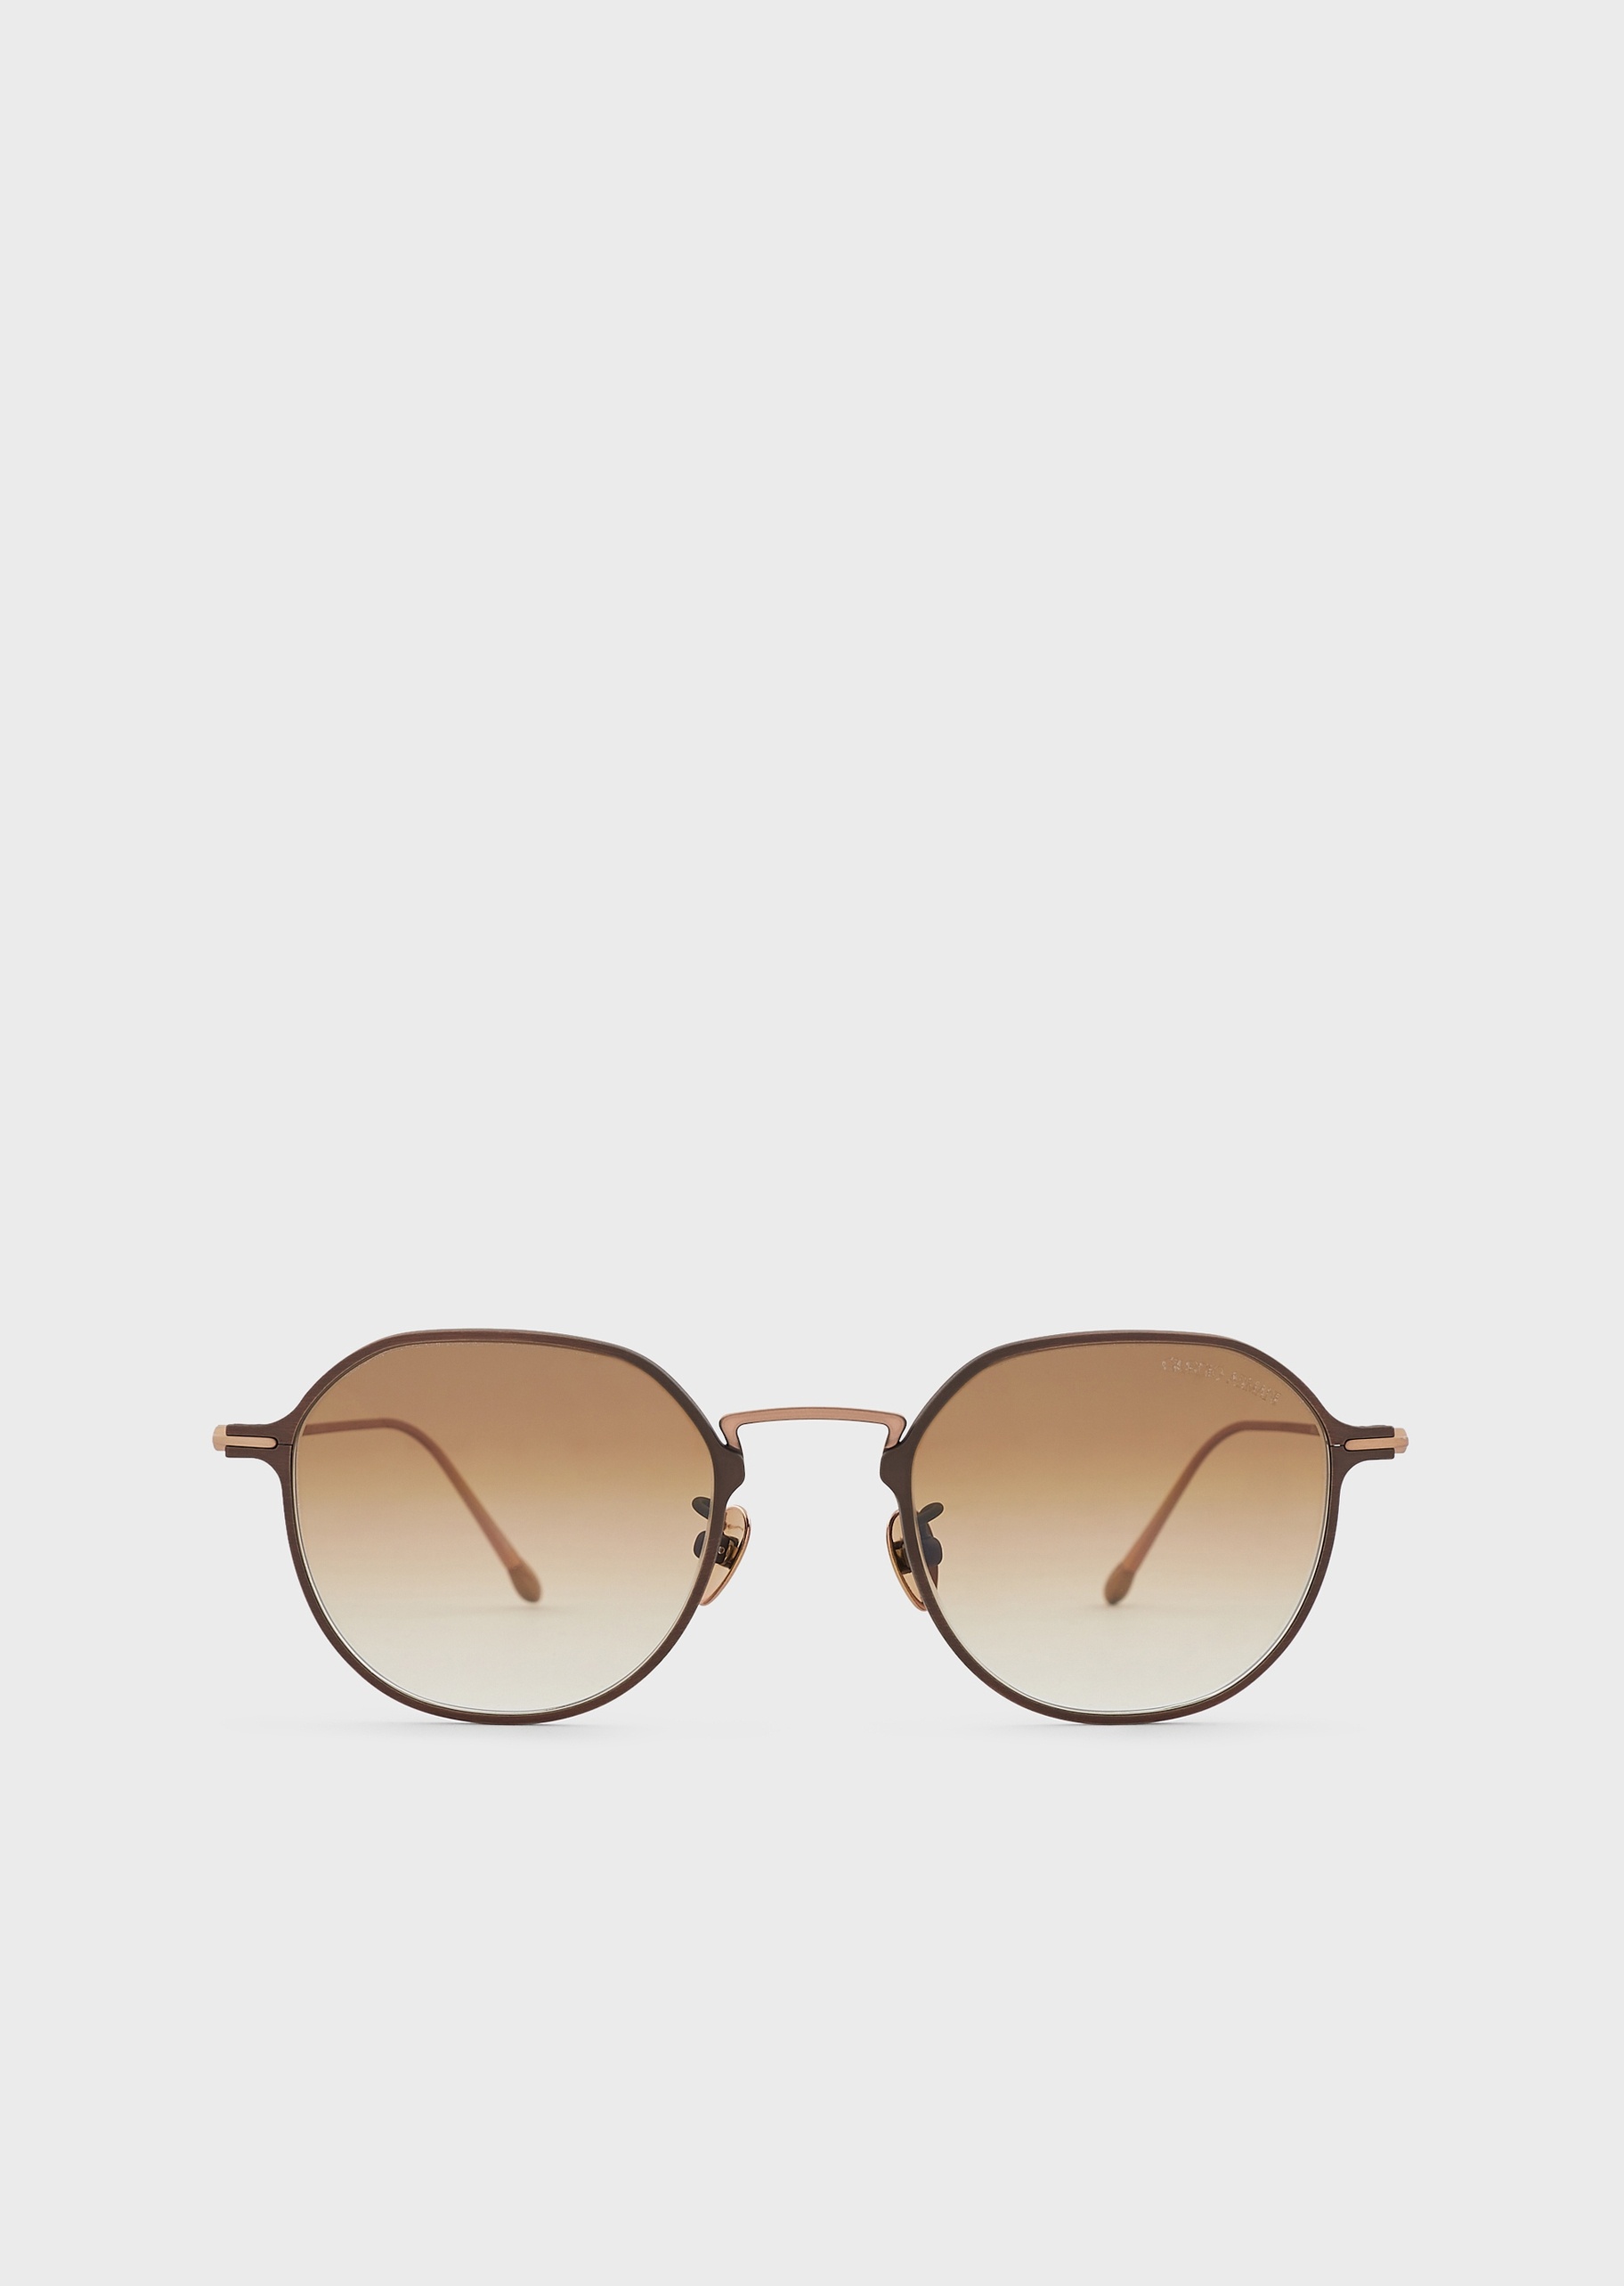 Giorgio Armani 男士潮流渐变细框太阳眼镜